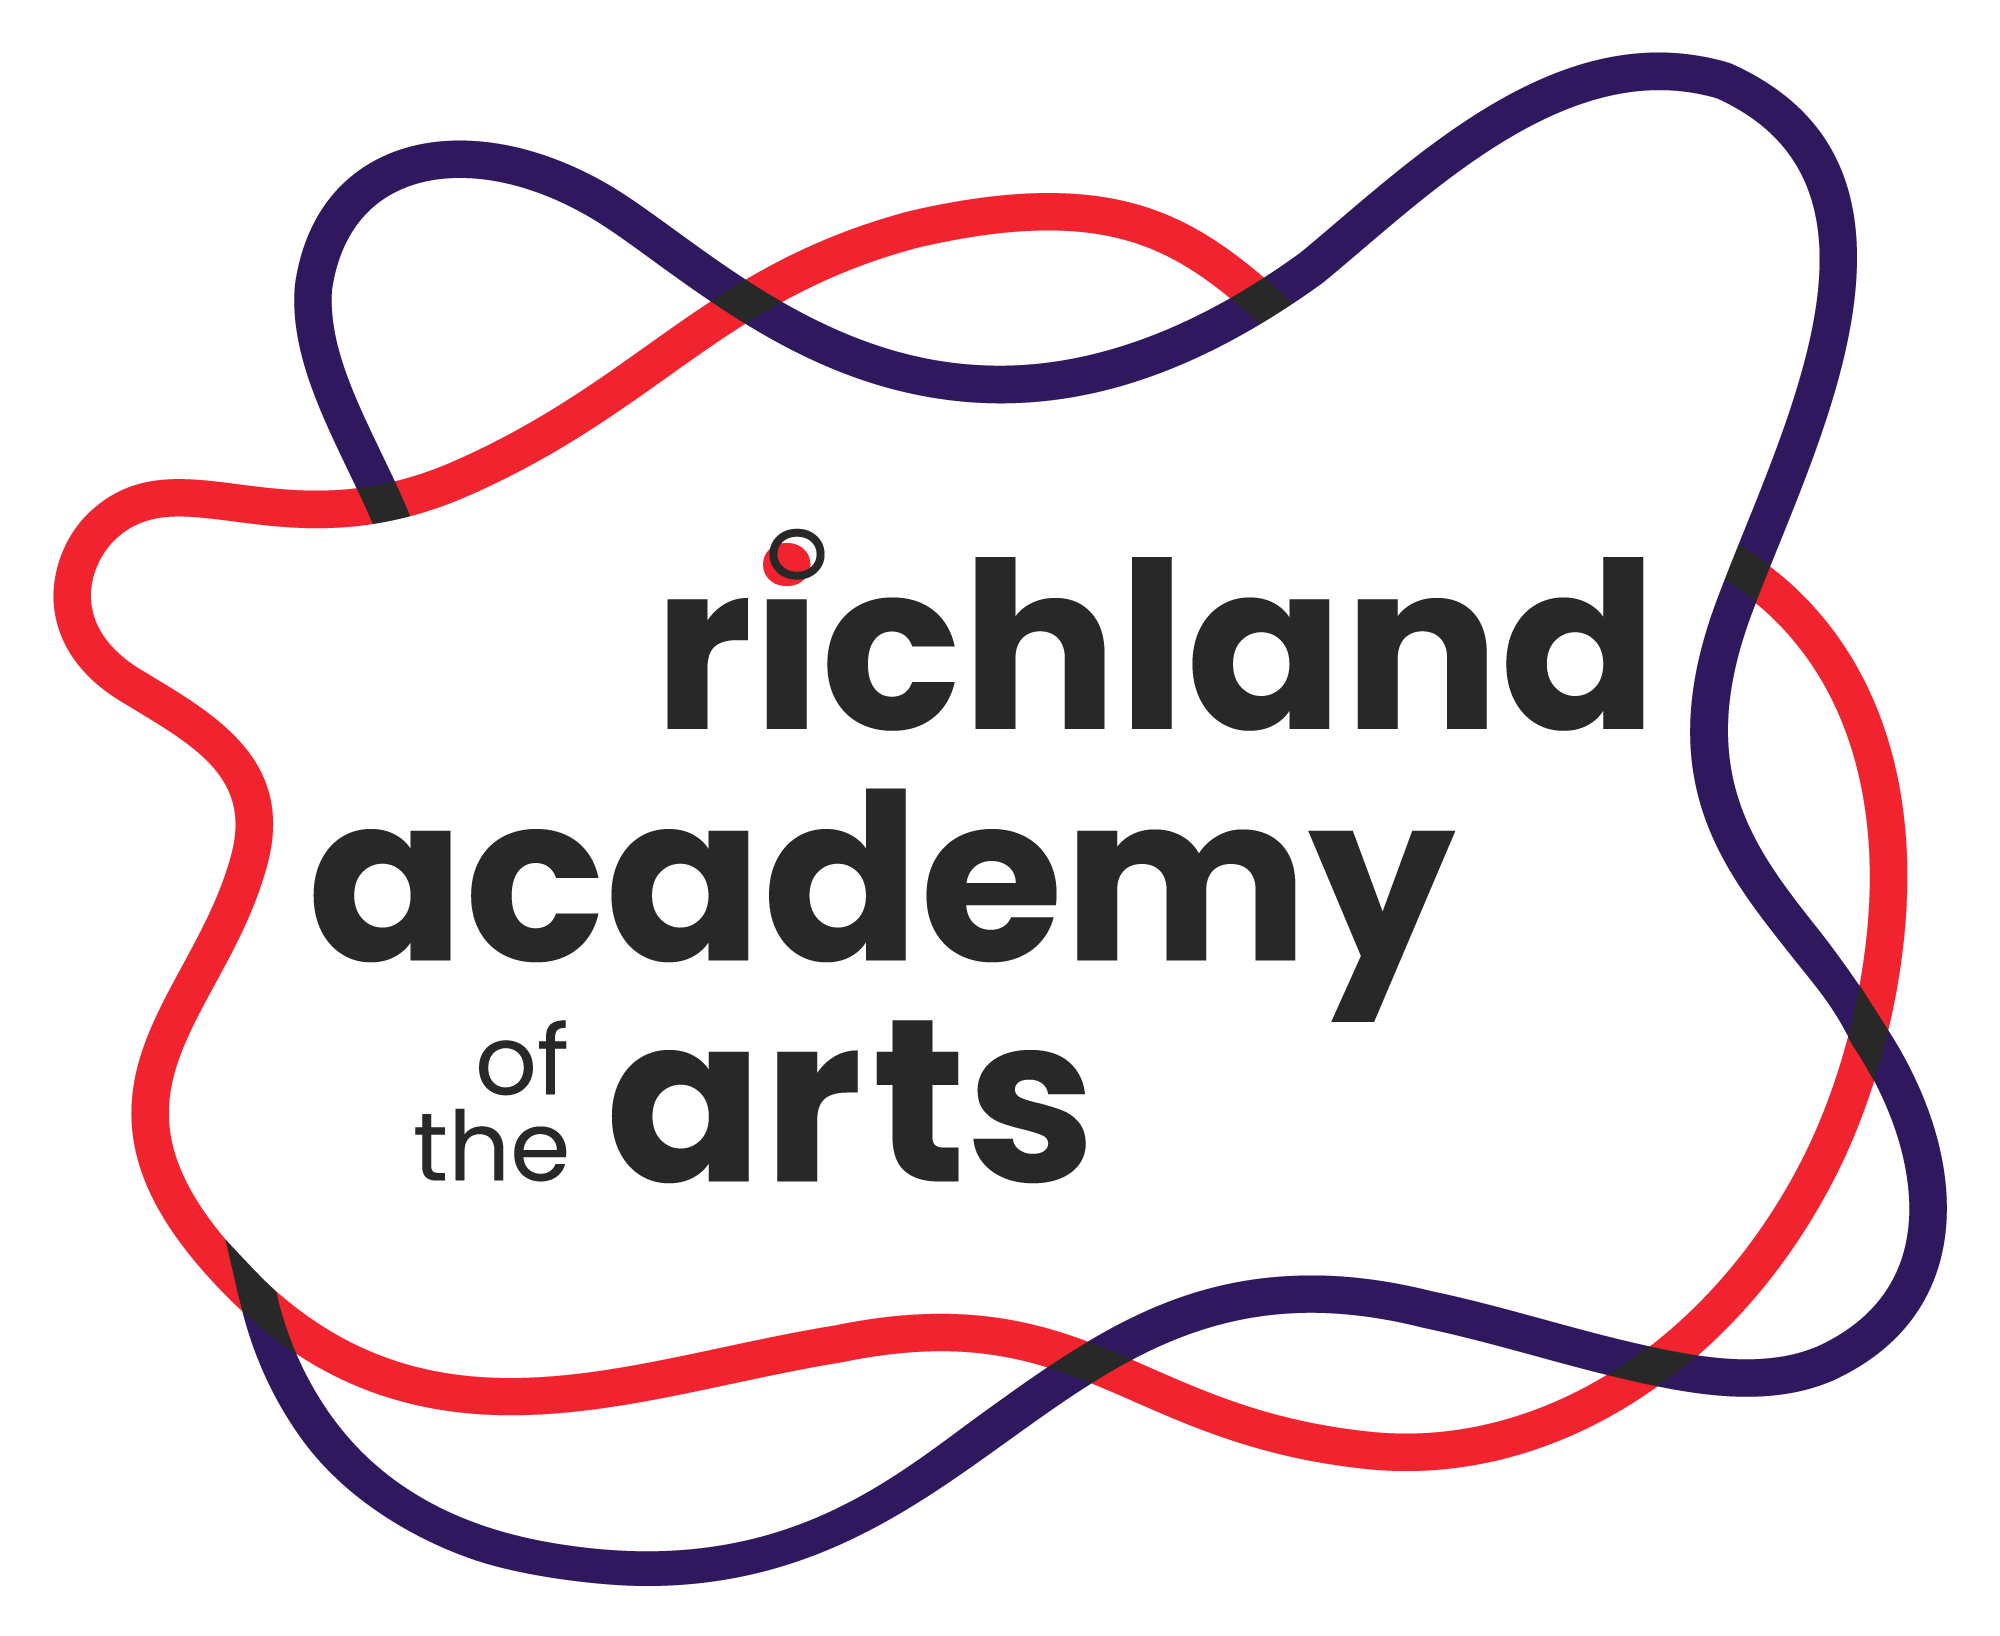 Richland Academy of the Arts logo